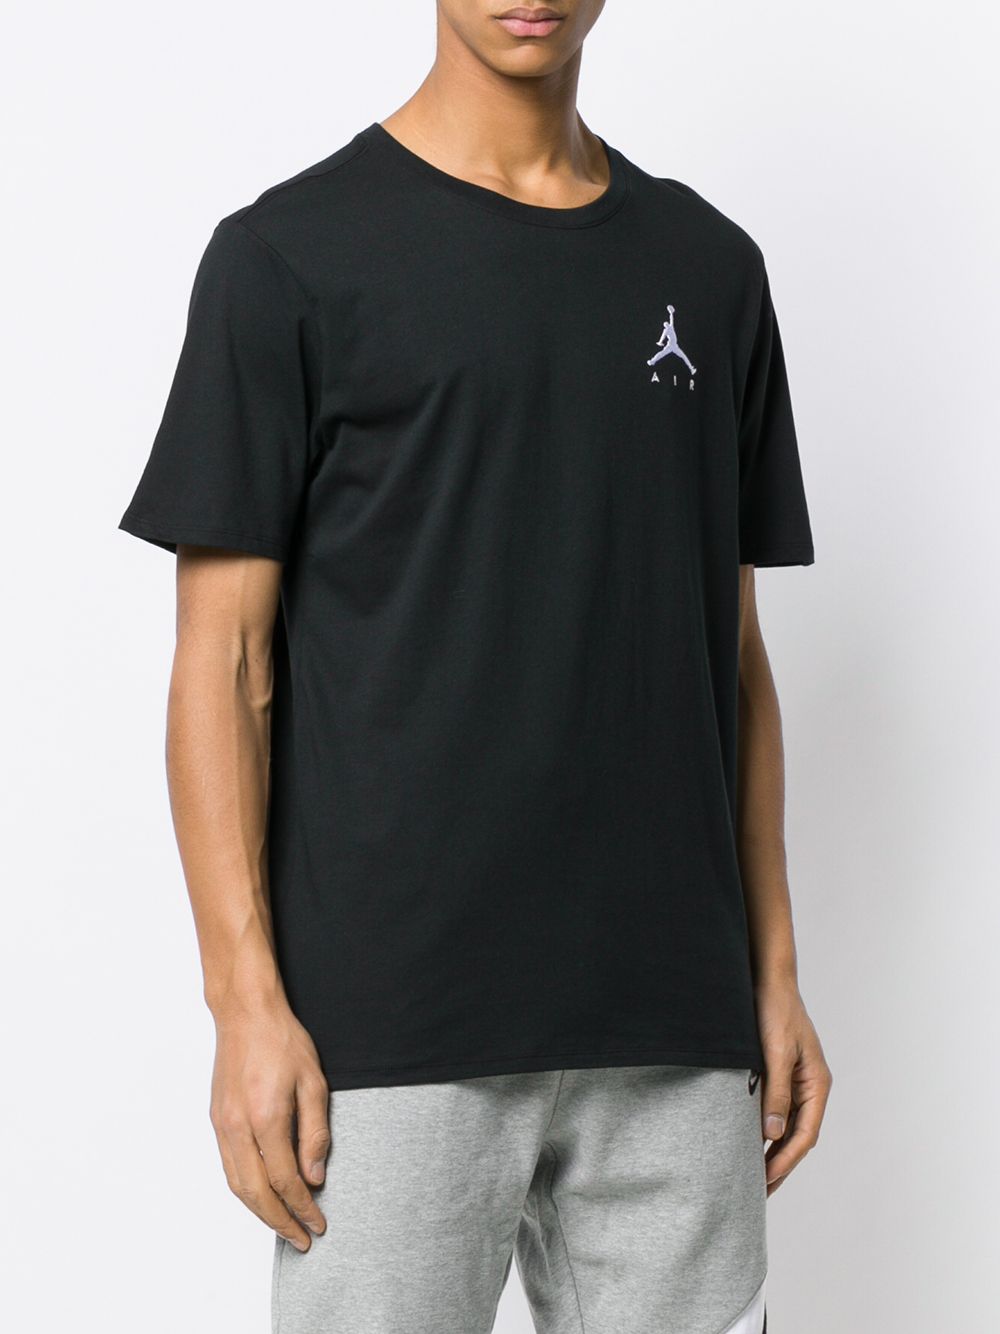 Nike Black Basketball T-shirt - Farfetch